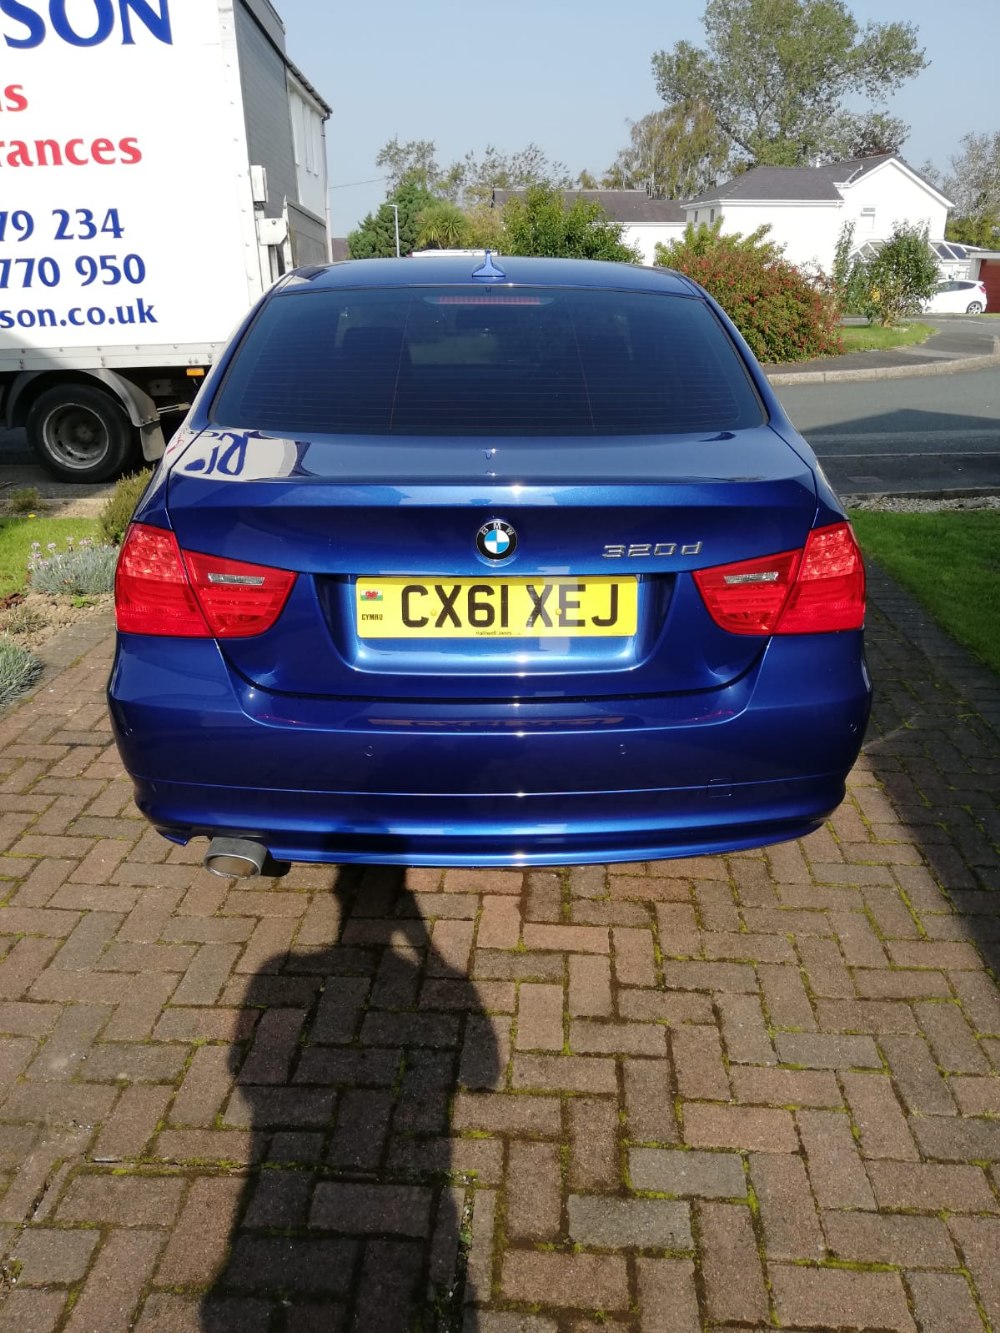 BMW 320 SALOON, Blue, Registration Number CX61 XEJ, Nov 2011 registered, untaxed, MOT to 11 - Image 3 of 15